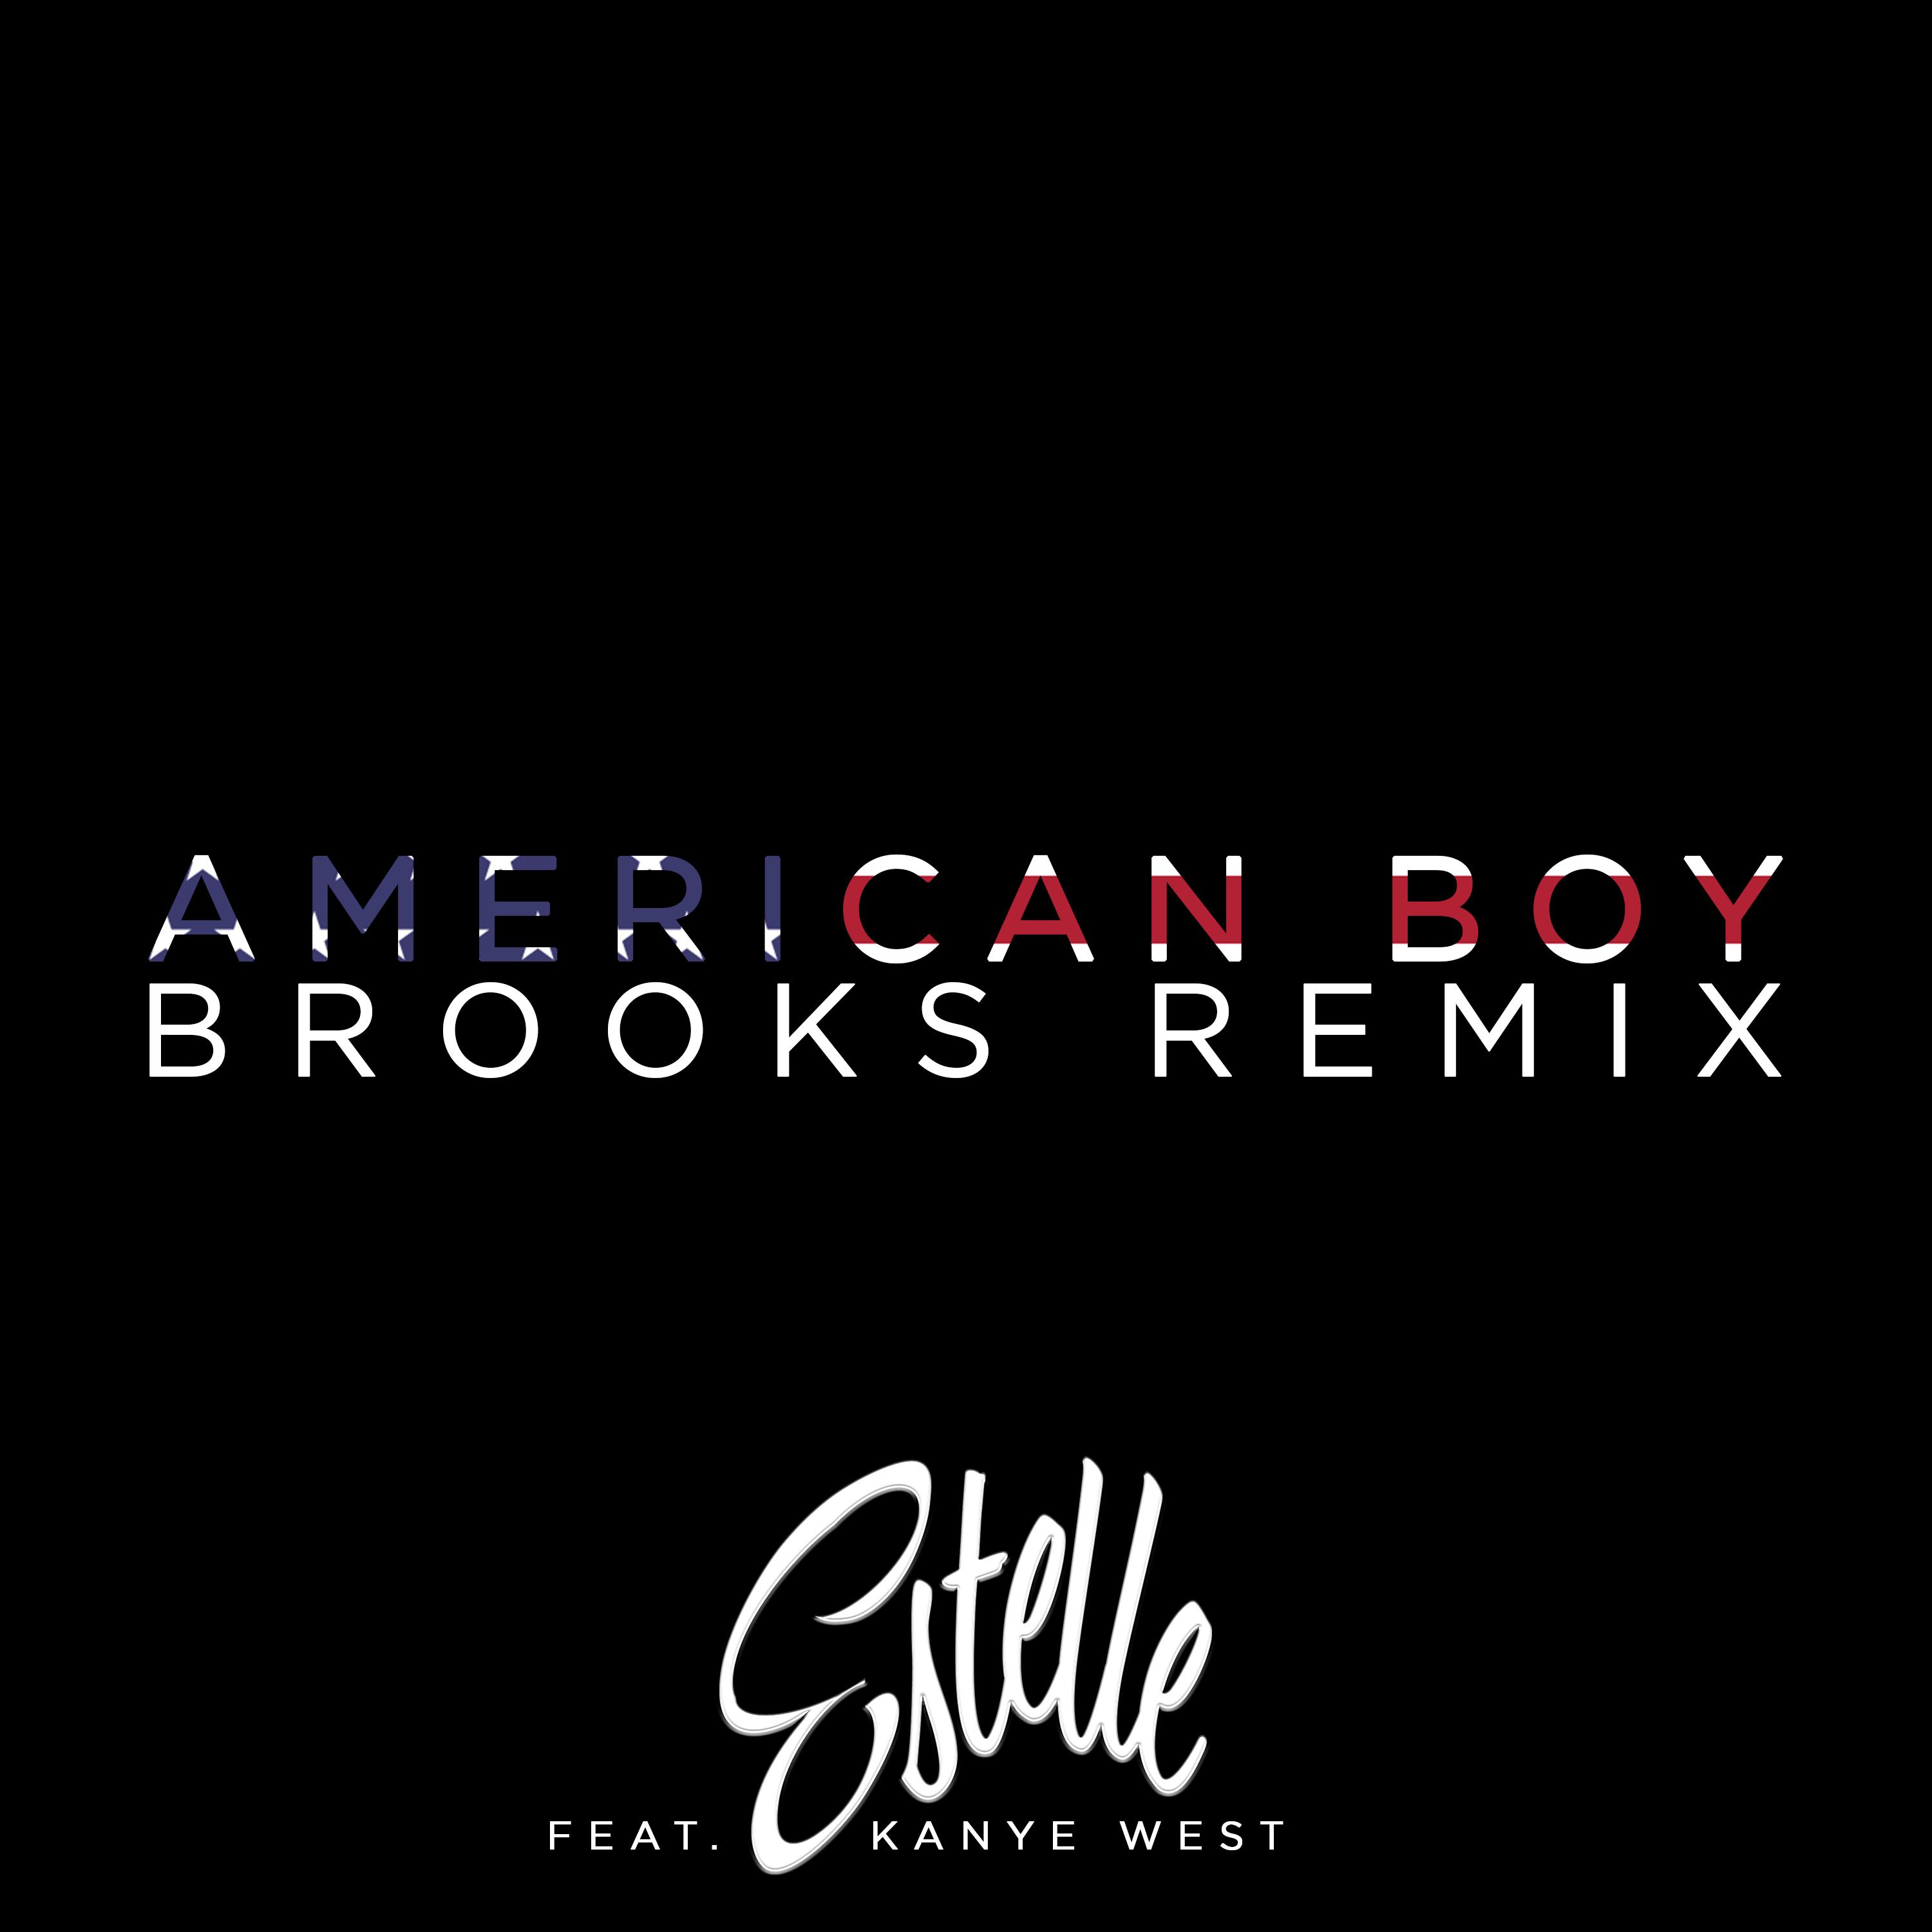 Estelle - American Boy (Brooks Remix)